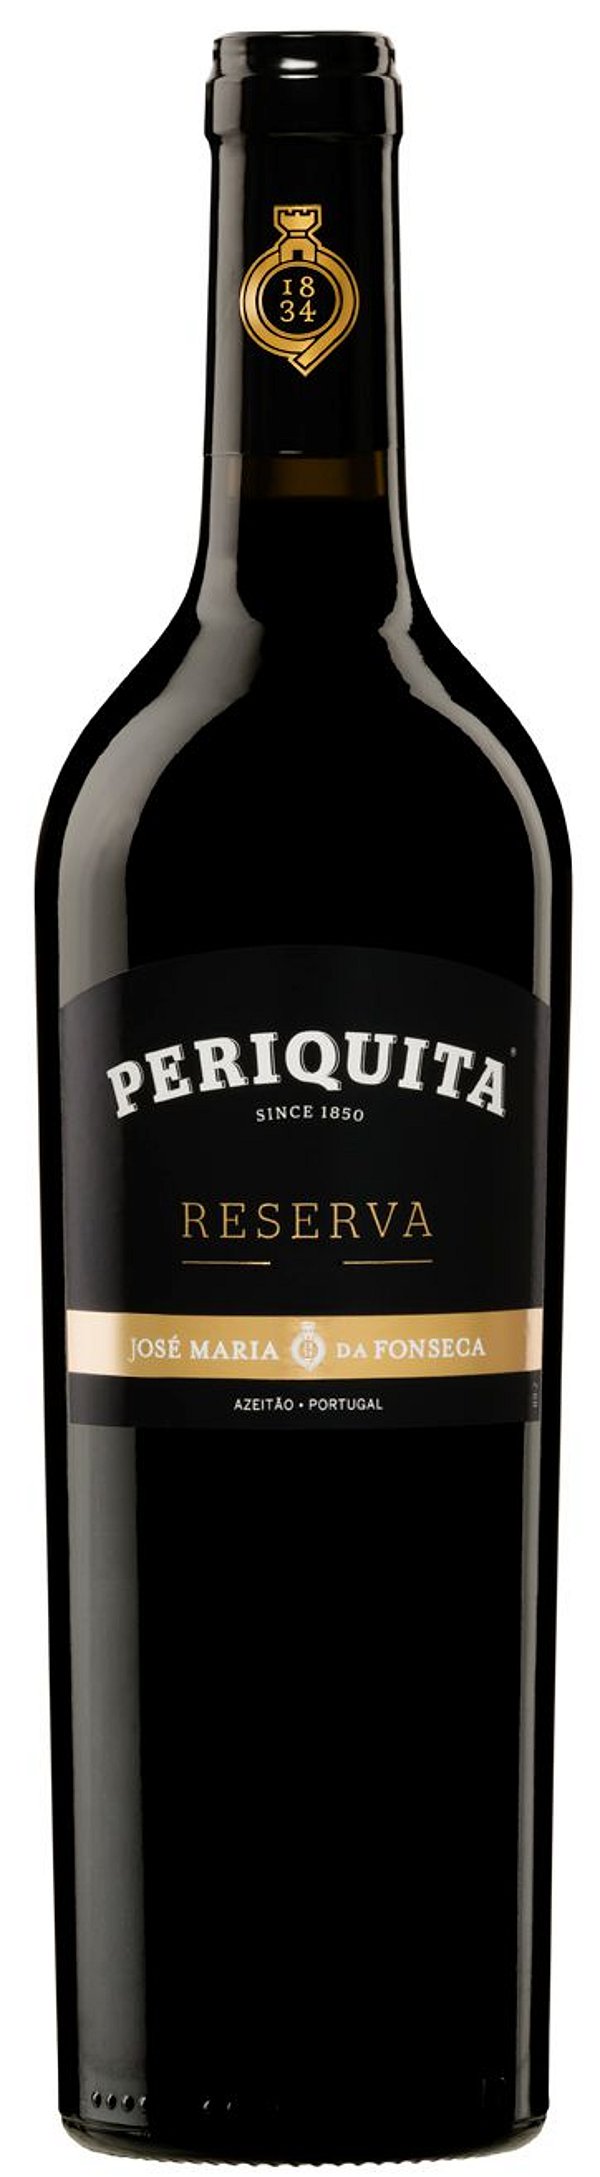 Vinho Periquita Reserva 750ml